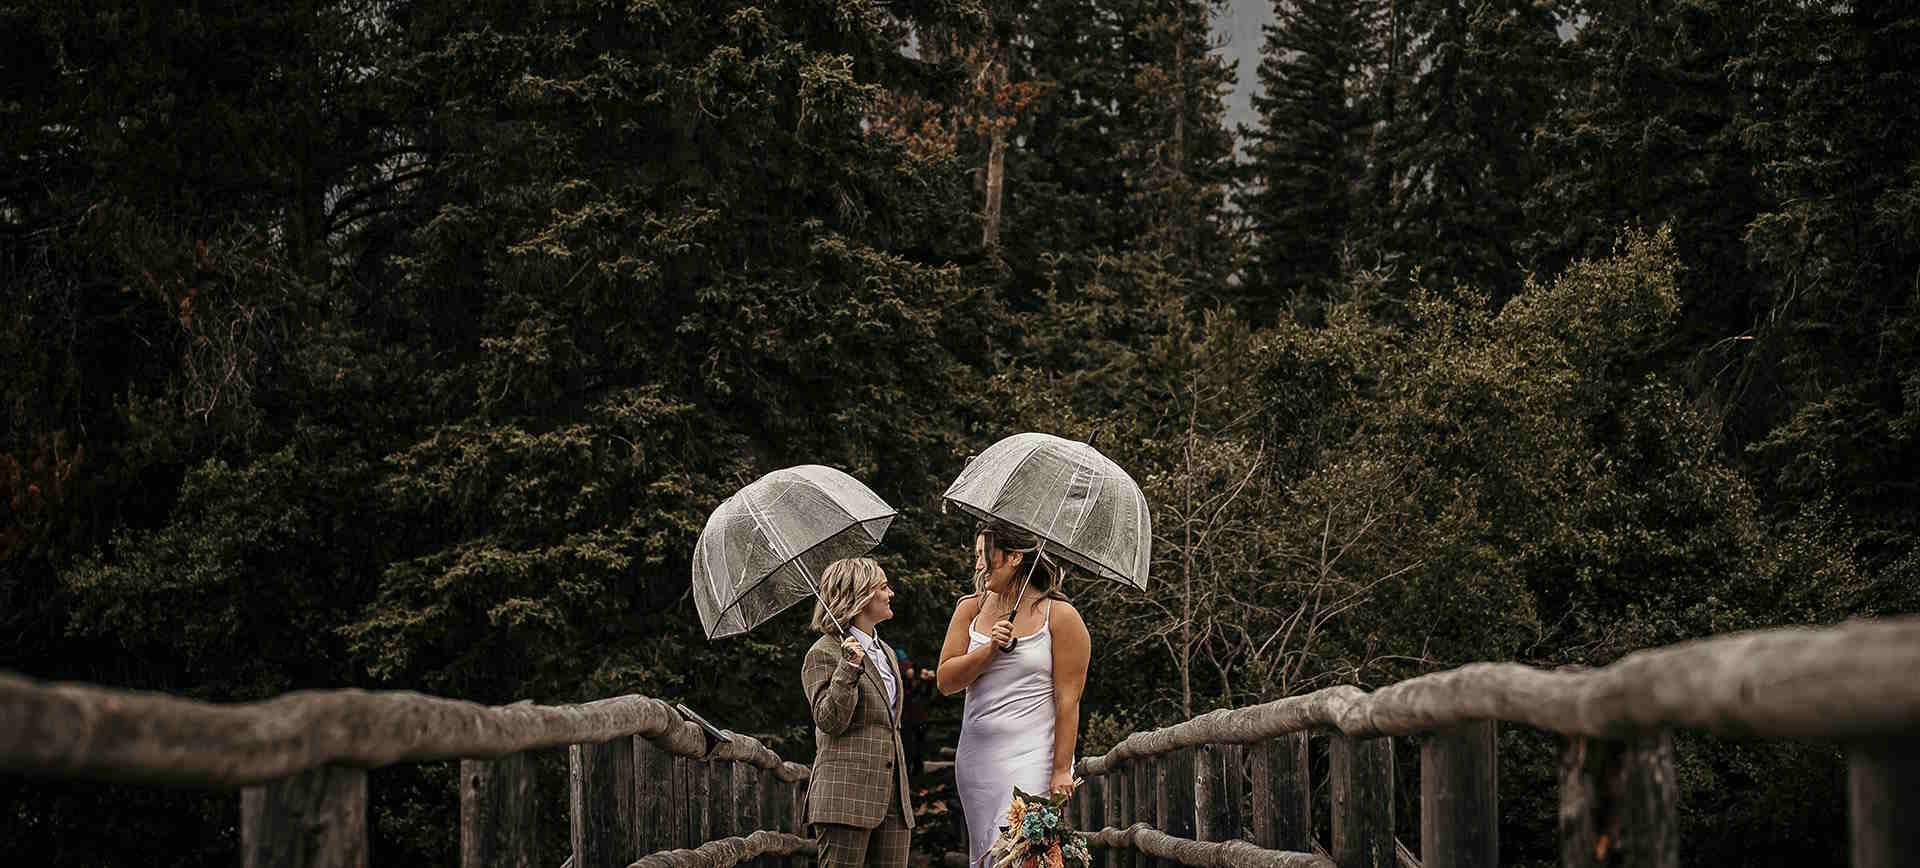 Epic Adventure Wedding Package in Banff